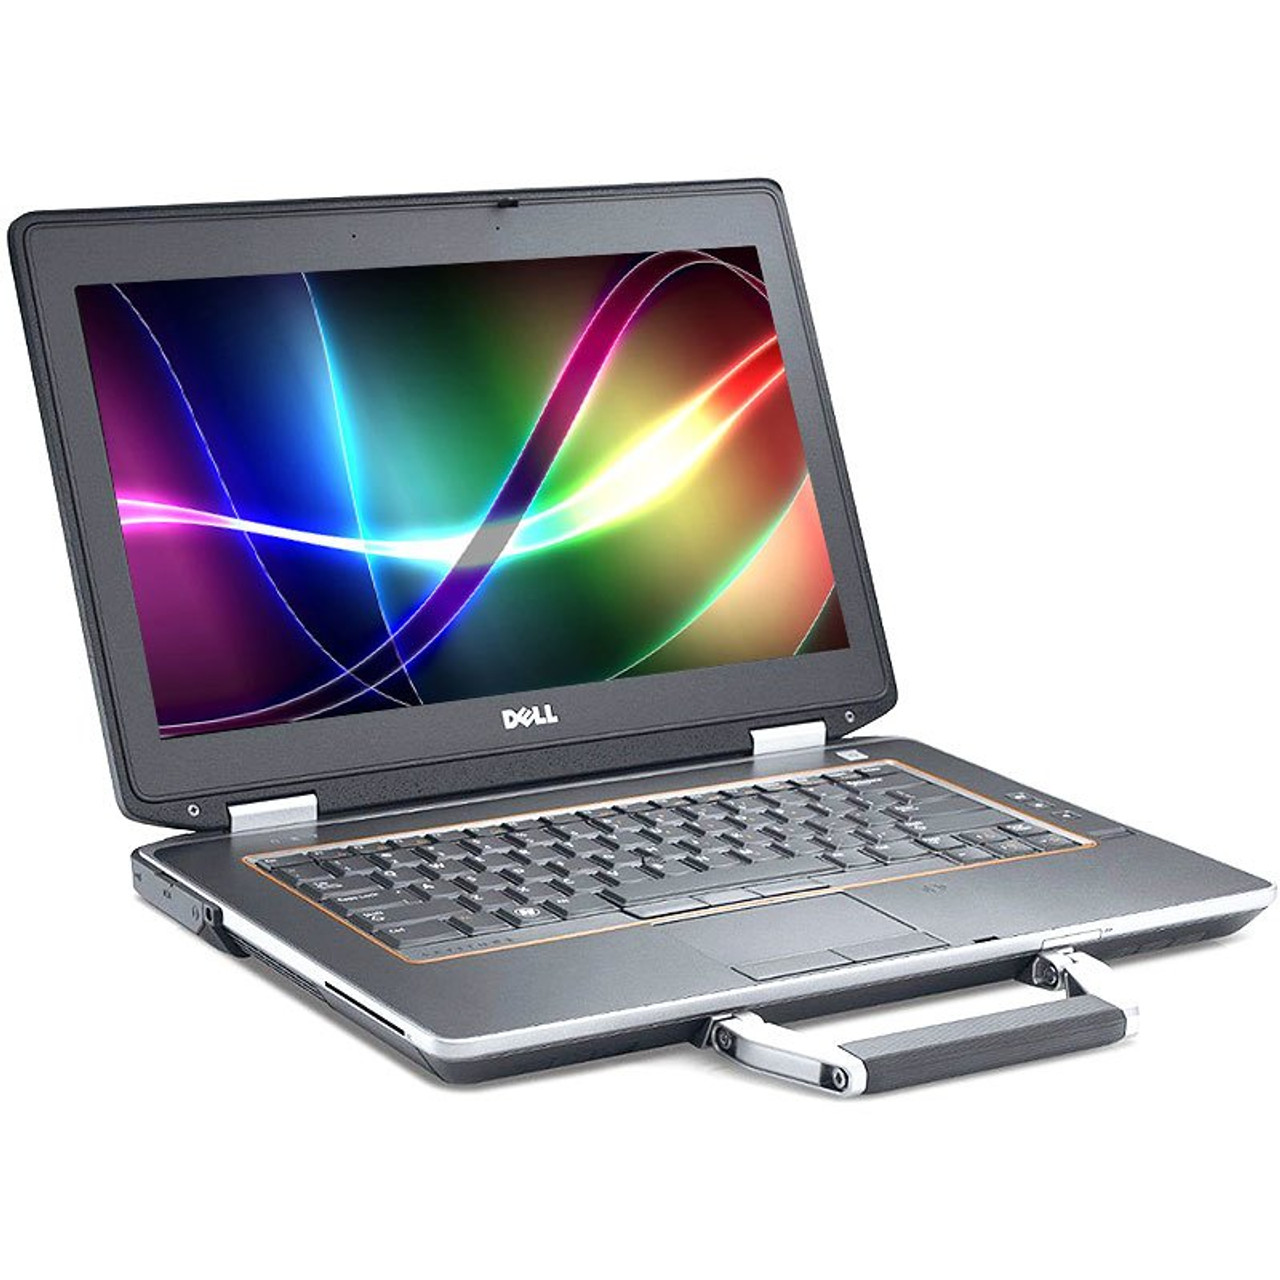 Dell Latitude E6420 ATG 14" Laptop Core i5-2540M 2.6GHz 4GB Memory 320GB HDD